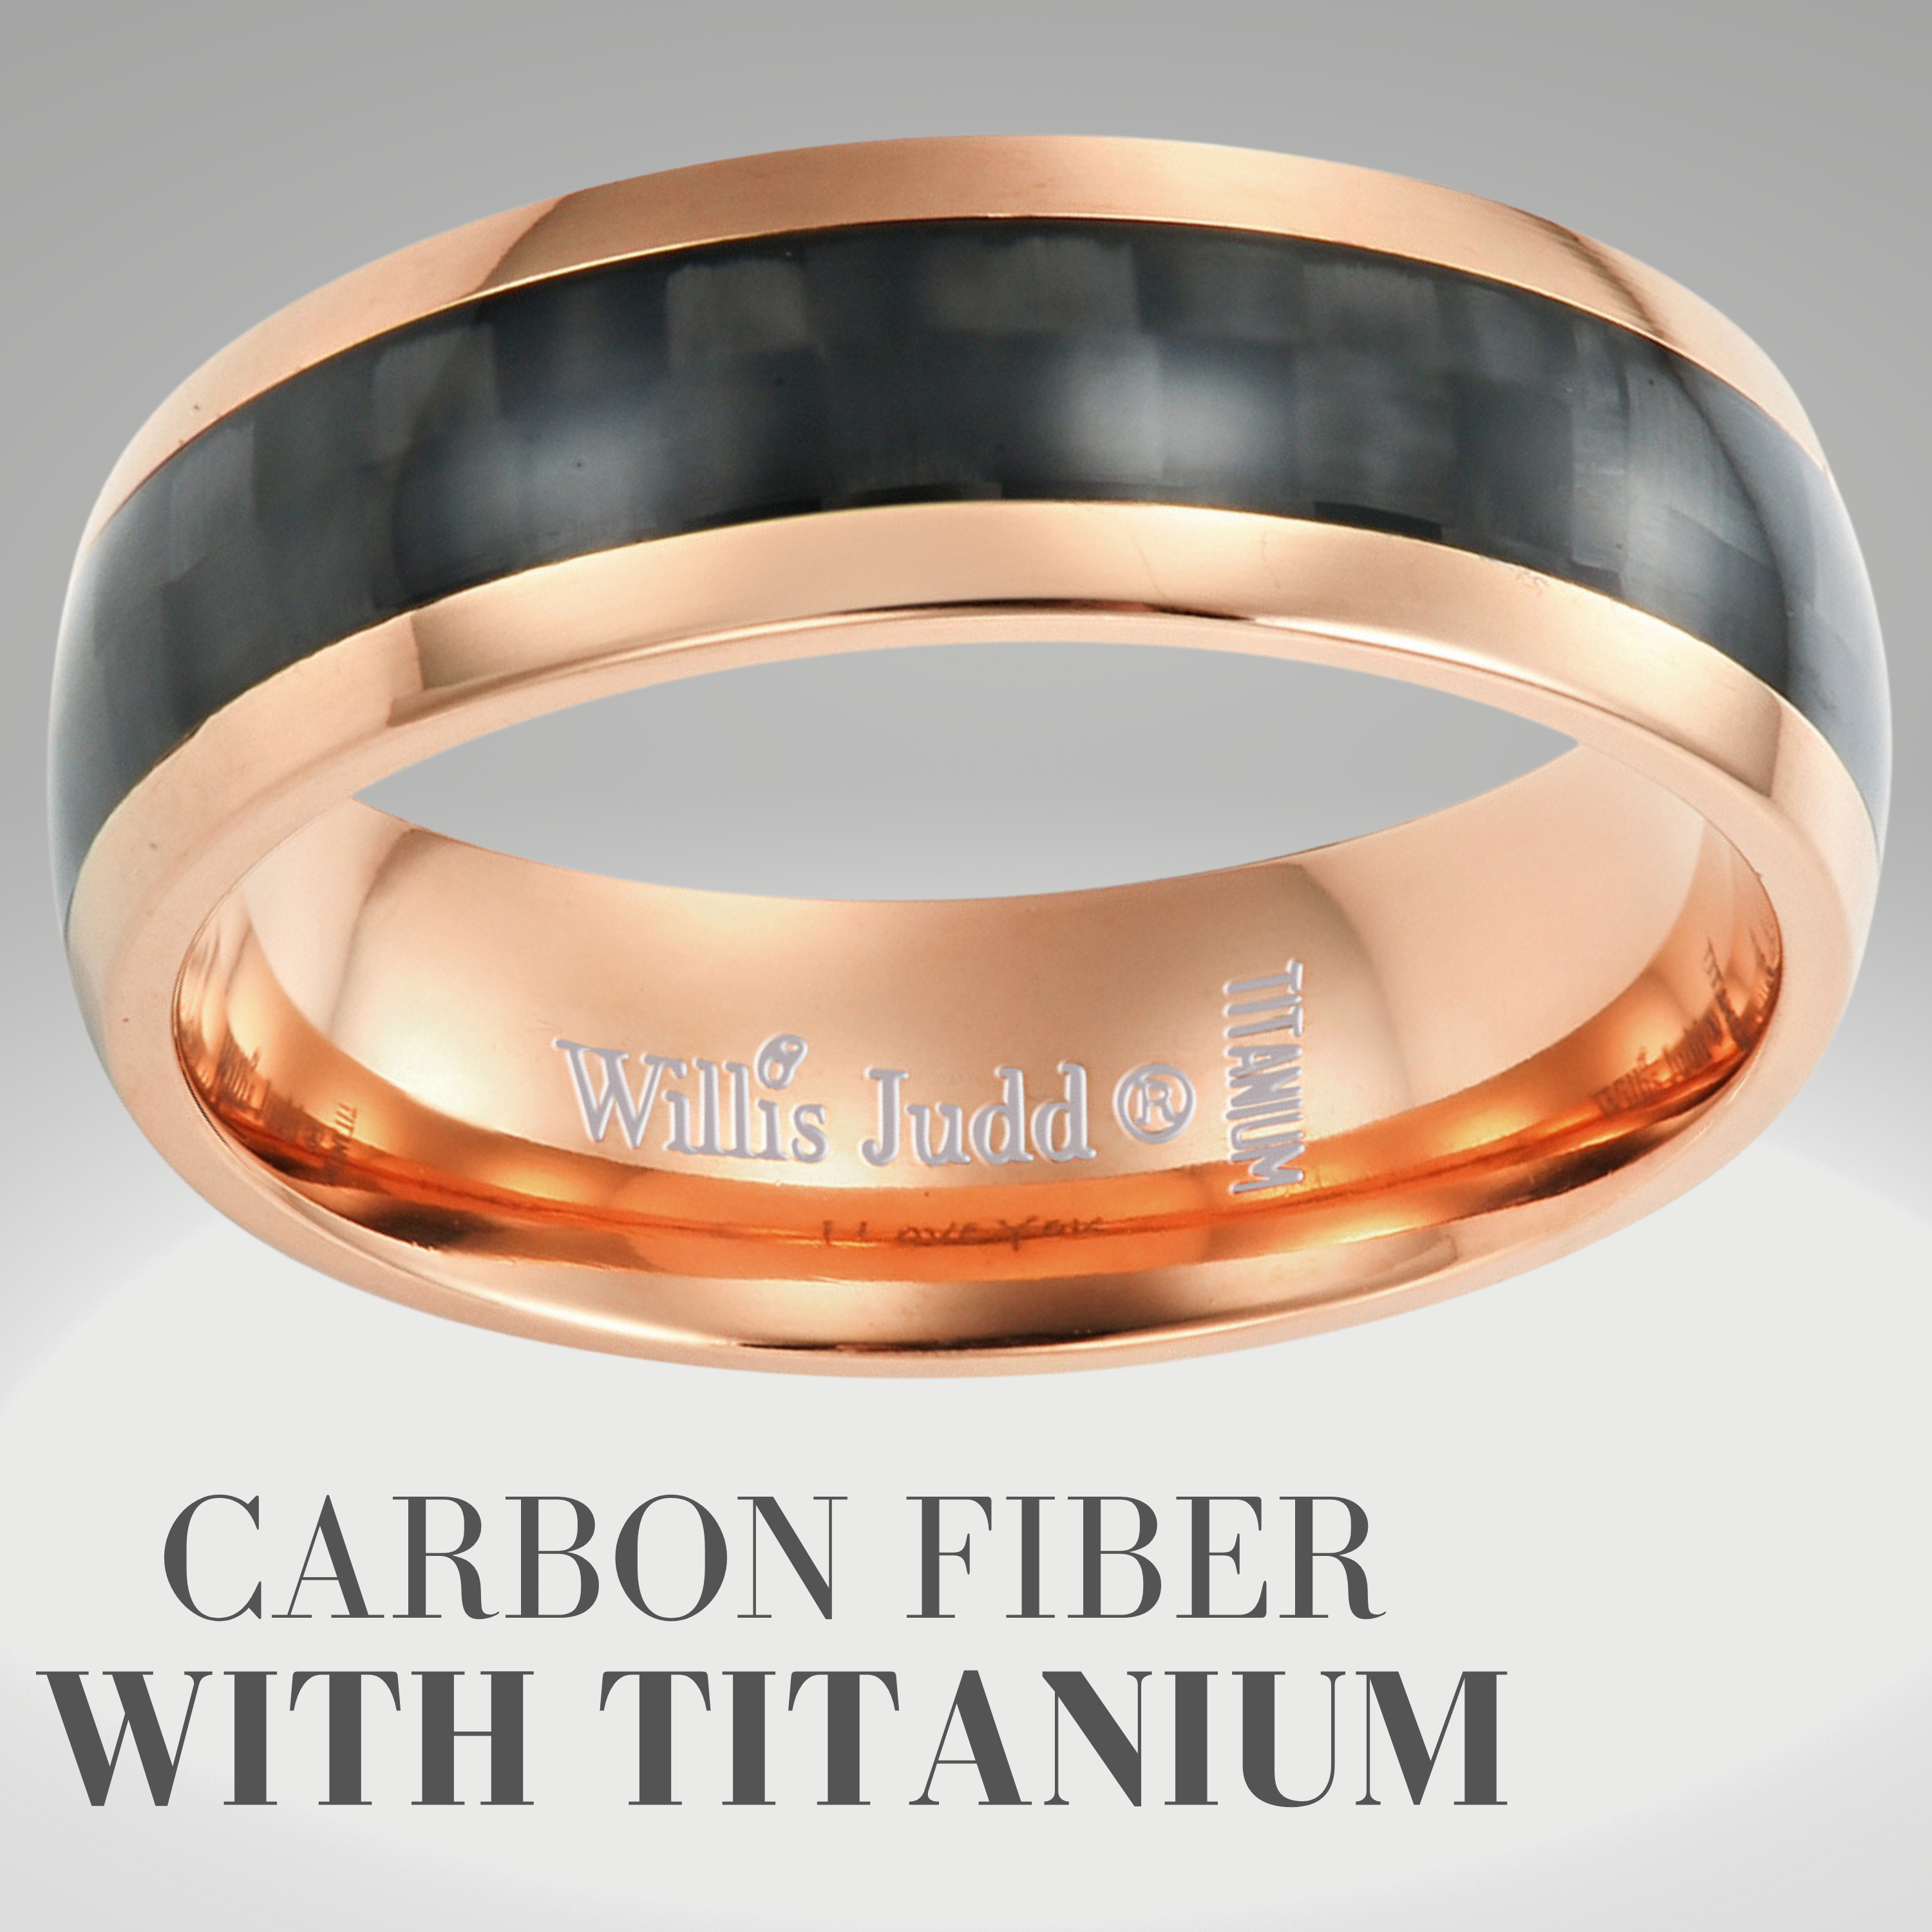 Men's Rose Gold Ring Etched I love You with Black Carbon Fibre